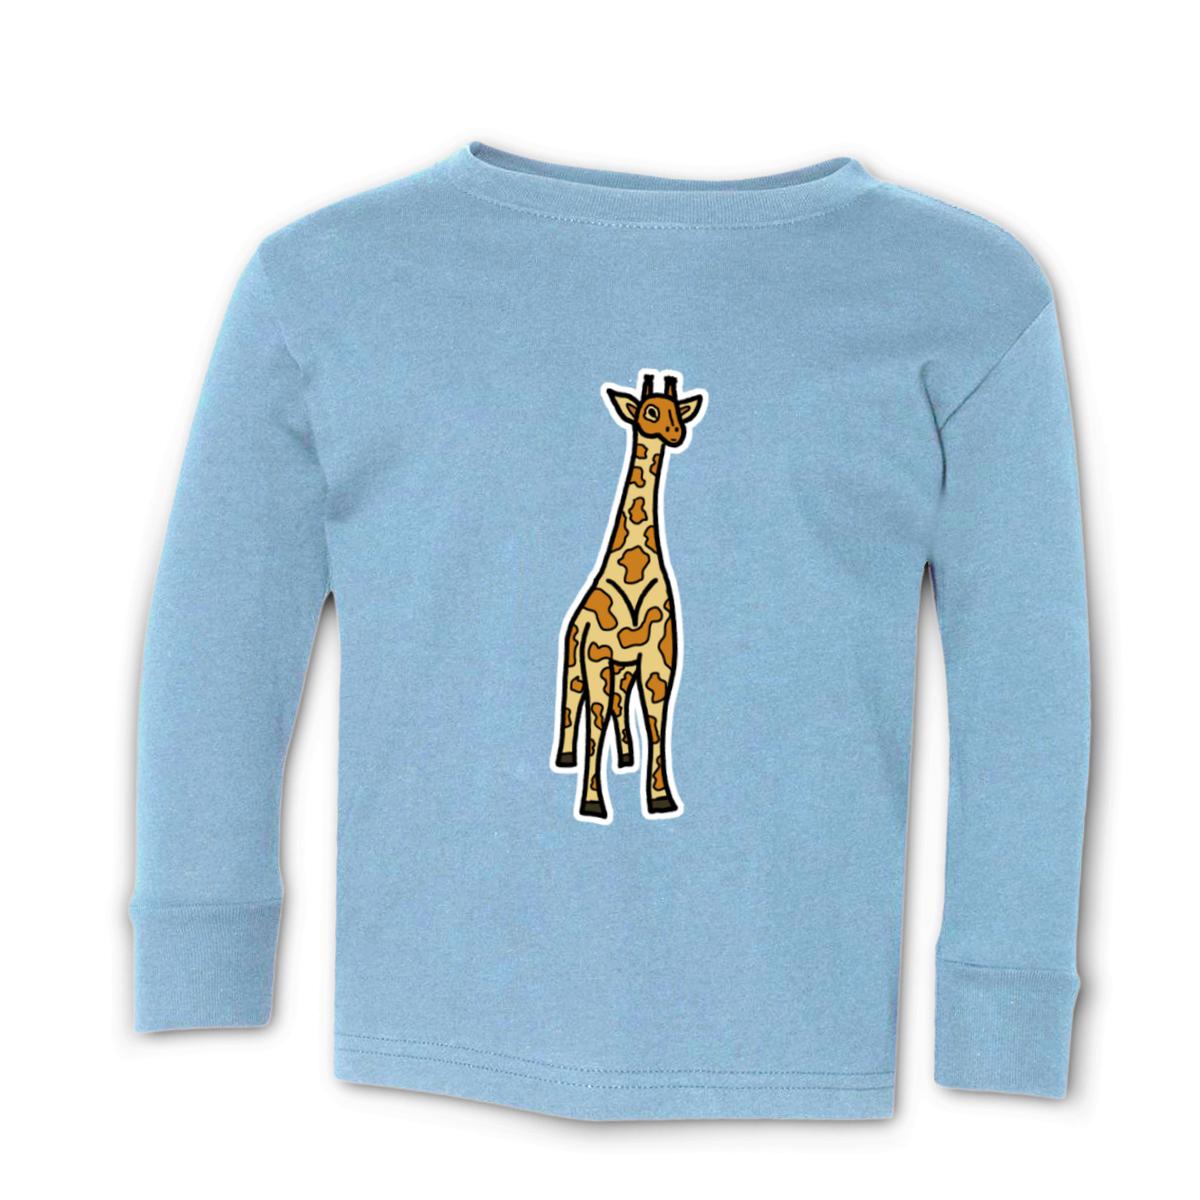 Toy Giraffe Toddler Long Sleeve Tee 4T light-blue